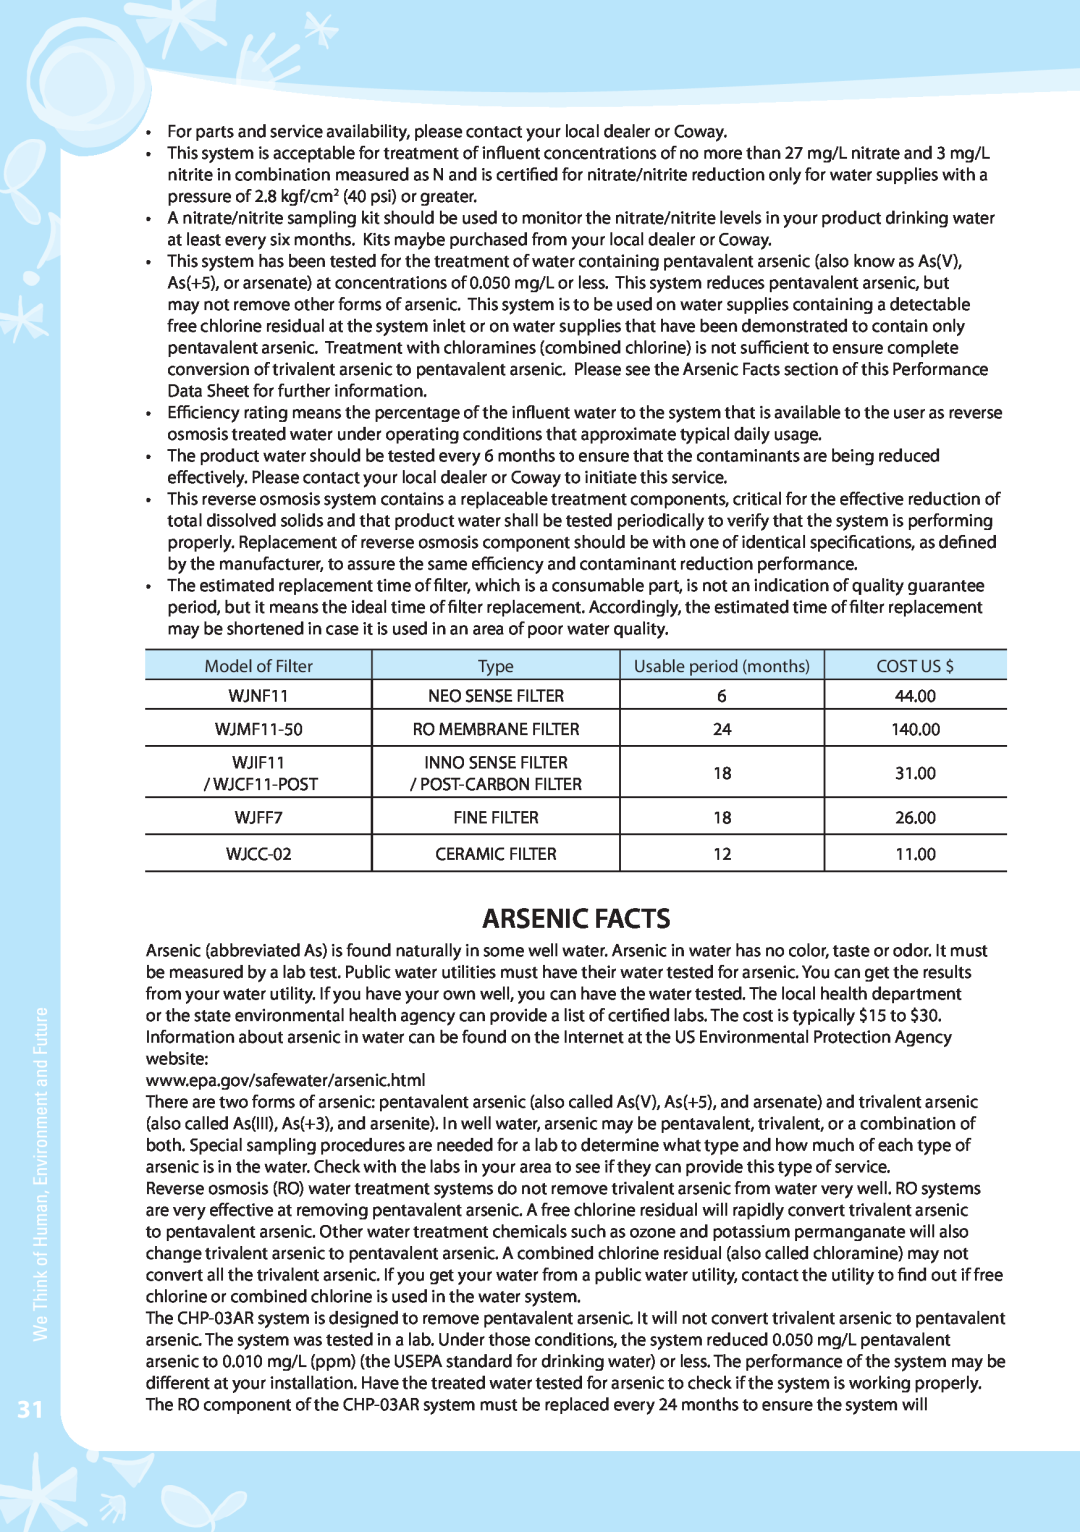 Coway CHP-03AU, CHP-03AL, CHP-03AR warranty Arsenic Facts 